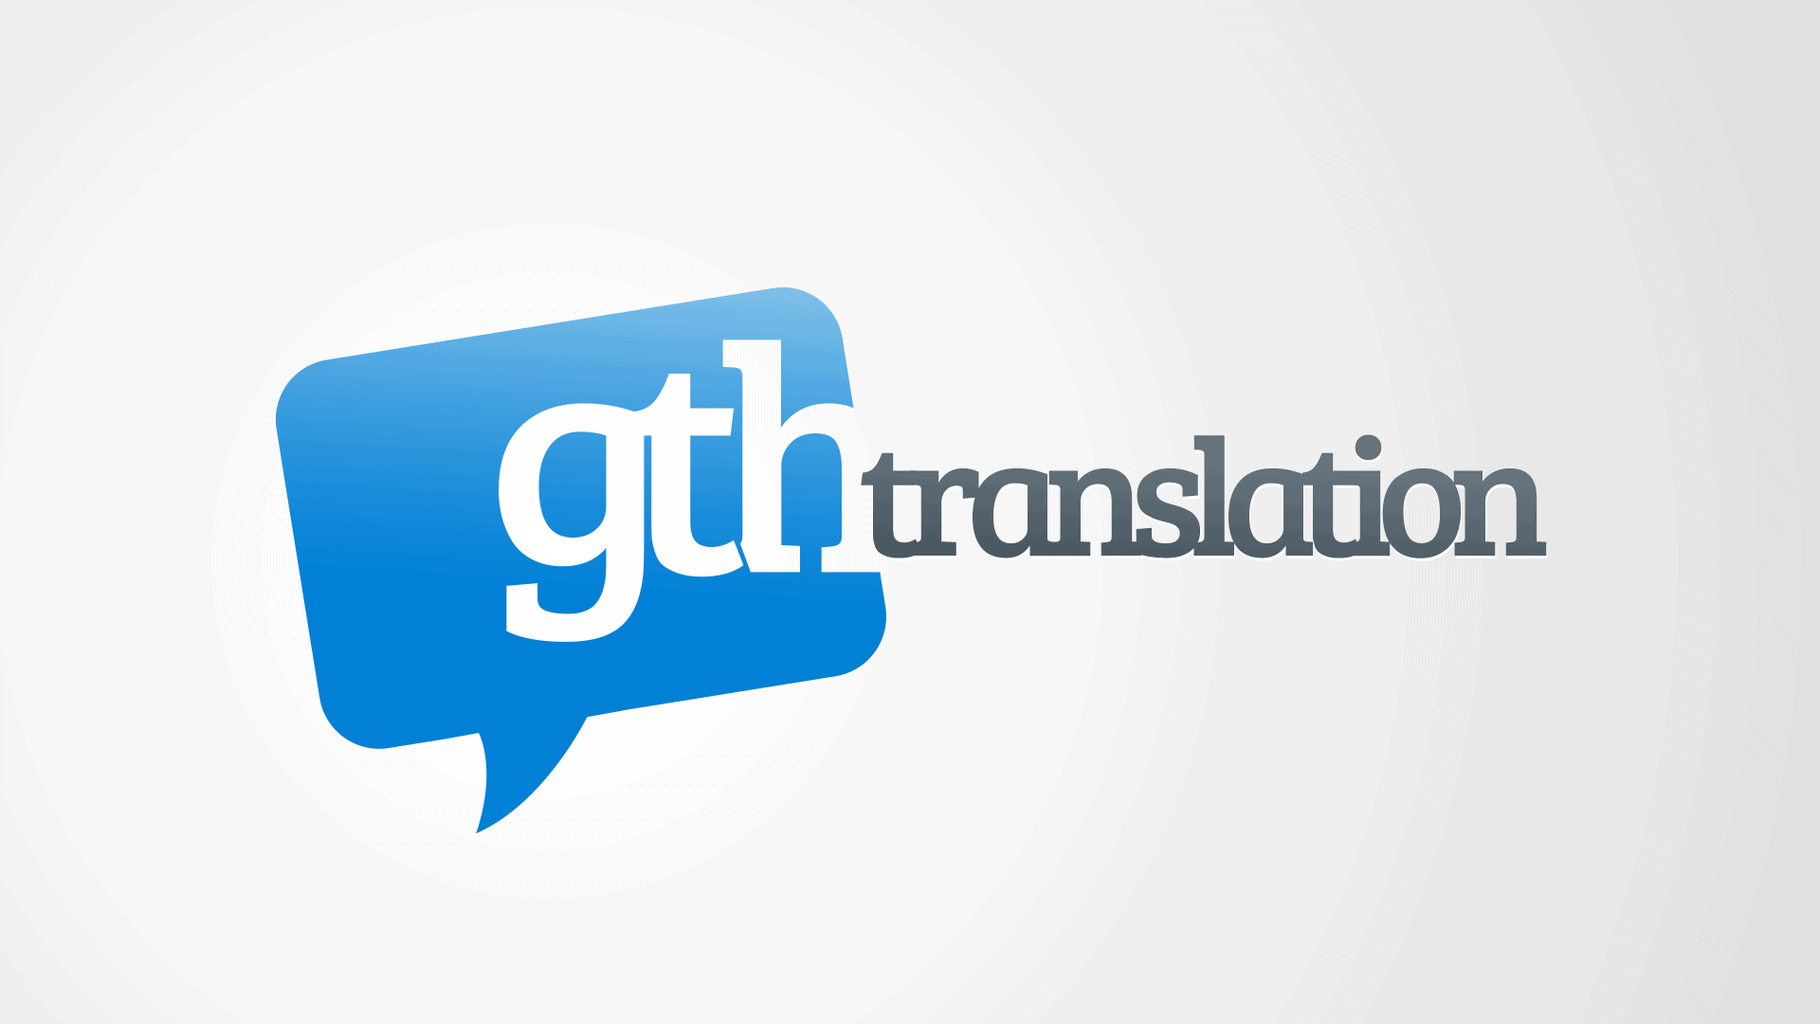 sigma igaming GTH translation’s Director of Business Operations, Ildiko Gyimesi